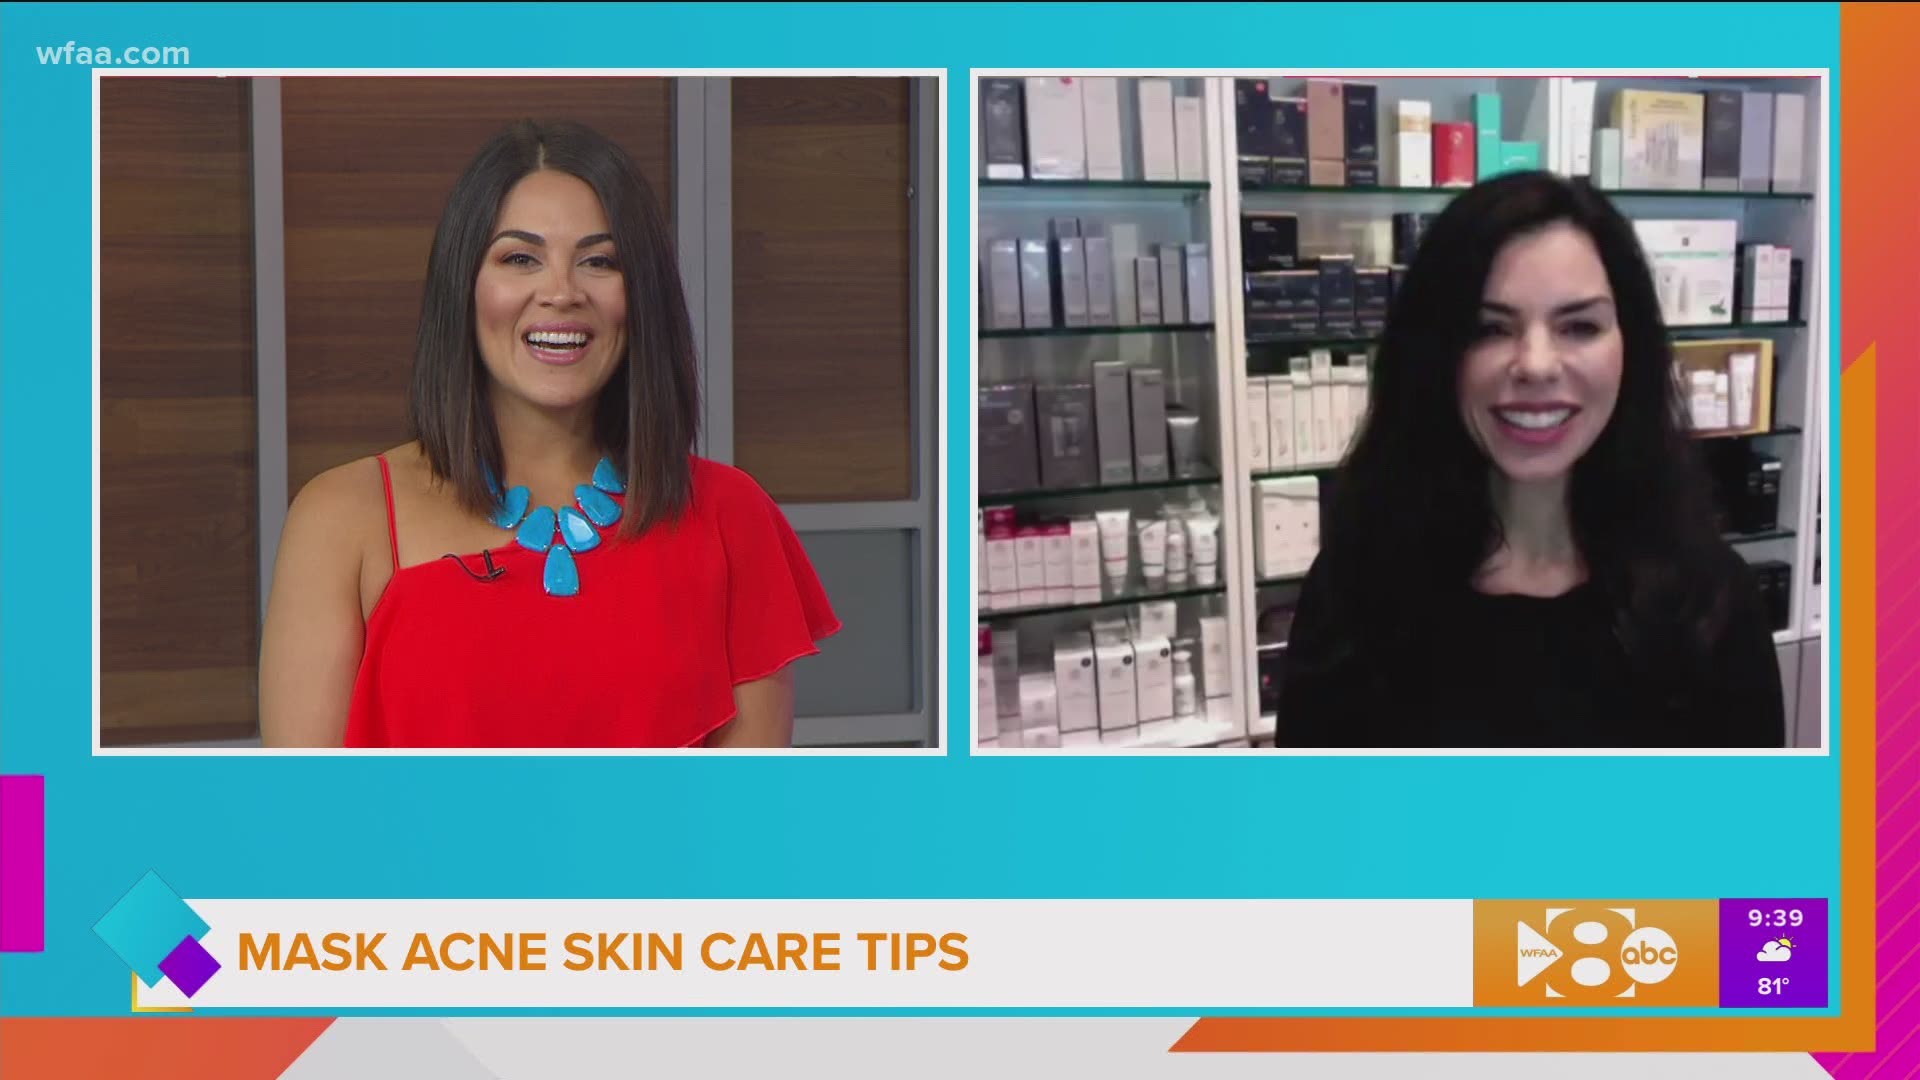 Mask acne skin care tips